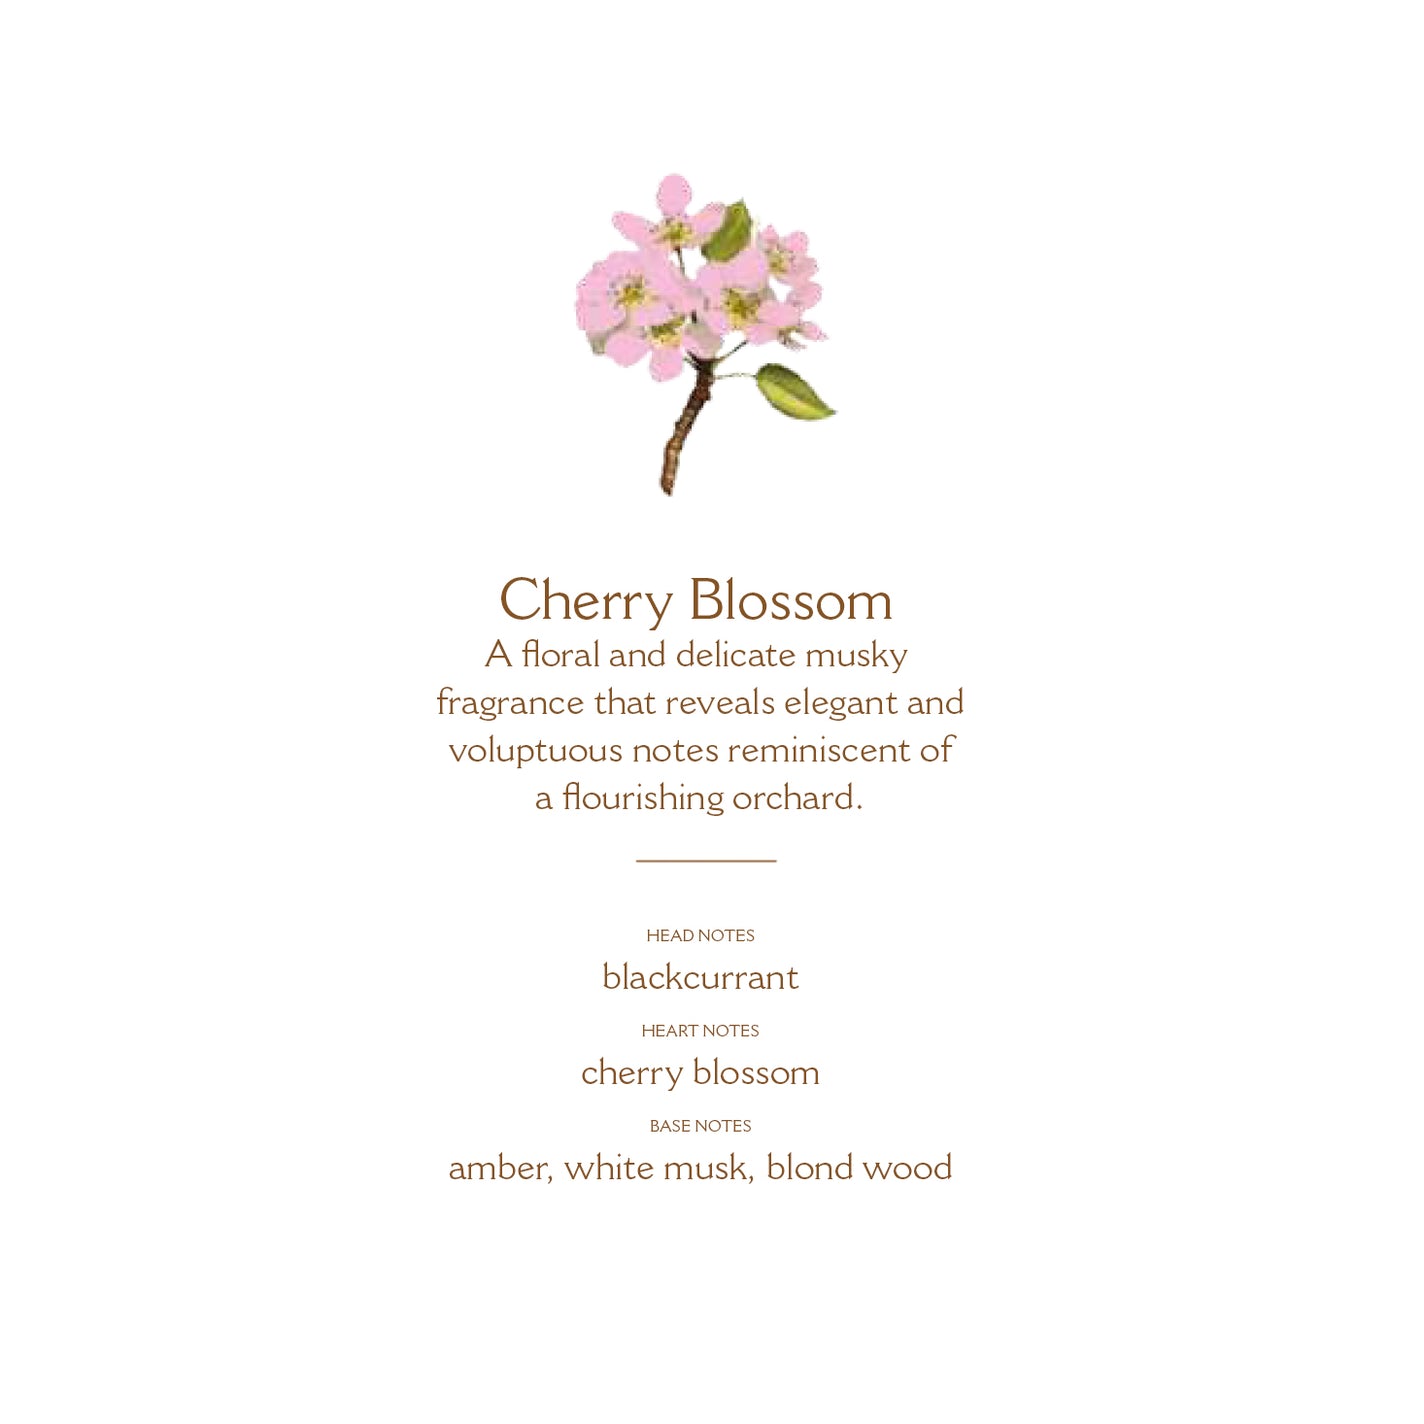 Panier des Sens Cherry Blossom Diffuser/Room Spray Refill